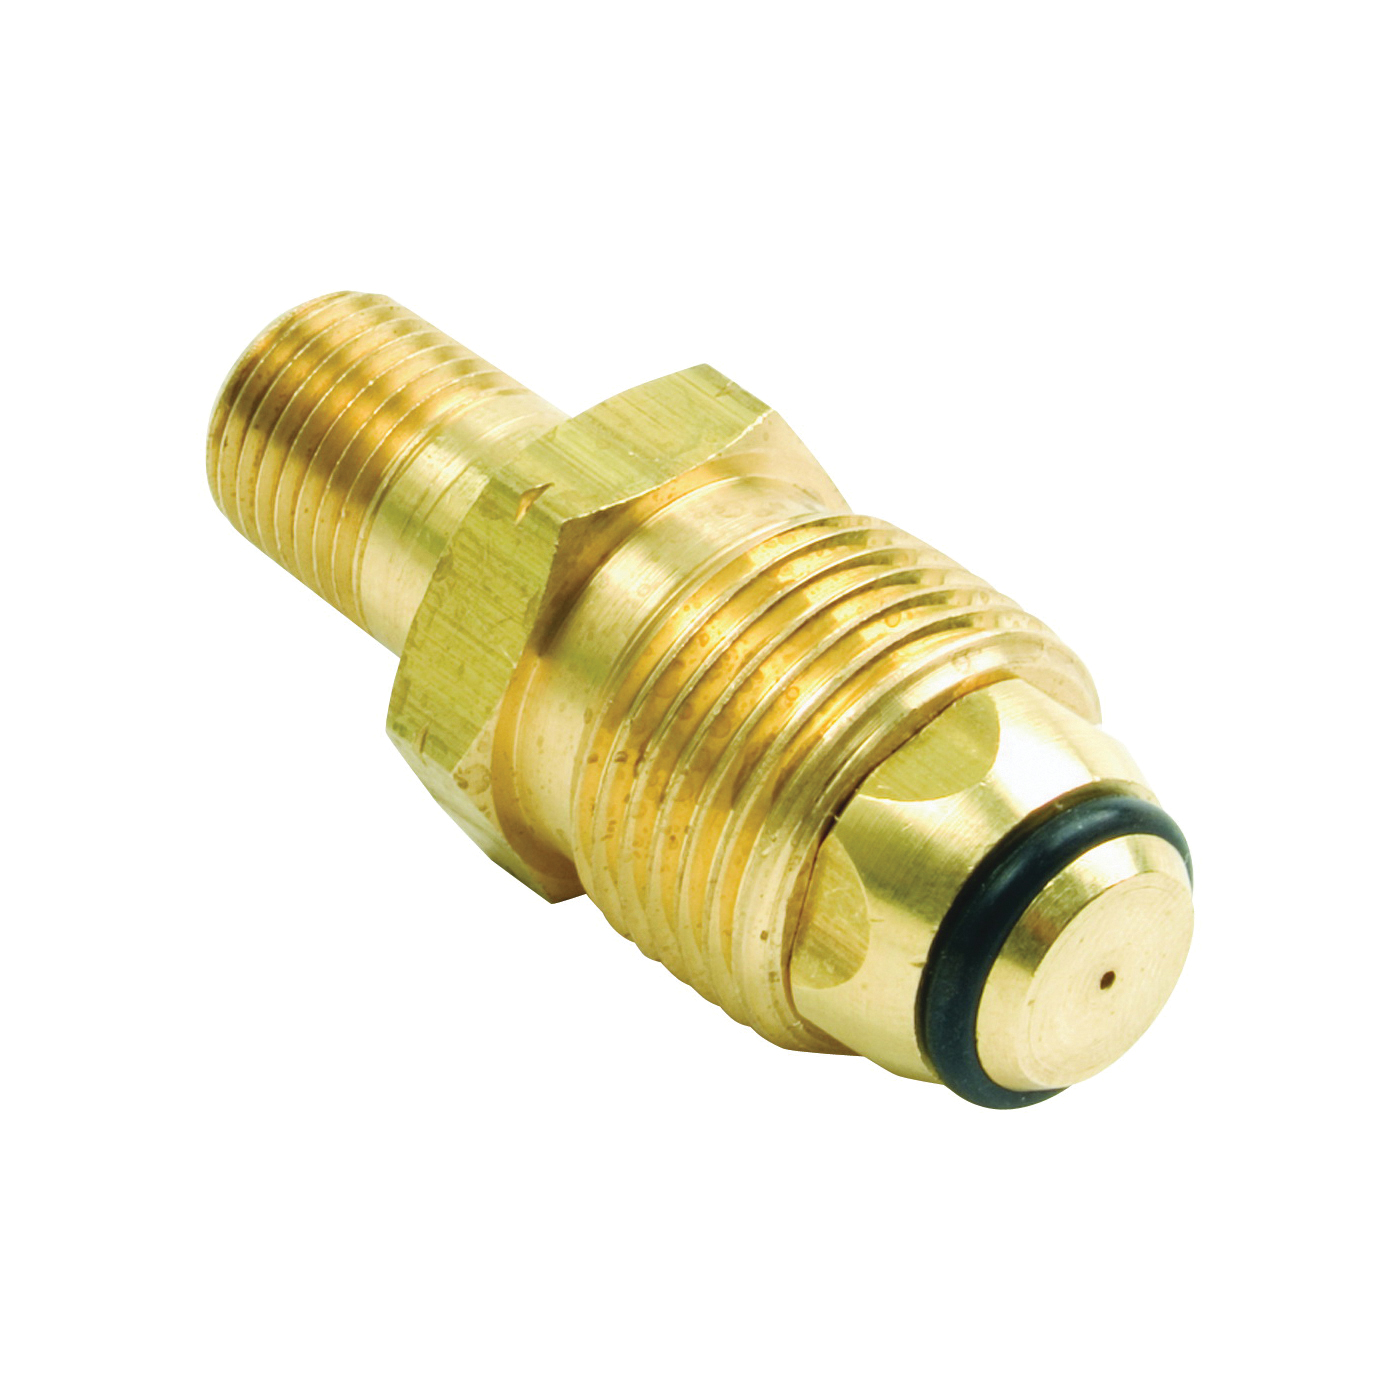 F276139 Cylinder Adapter, Brass